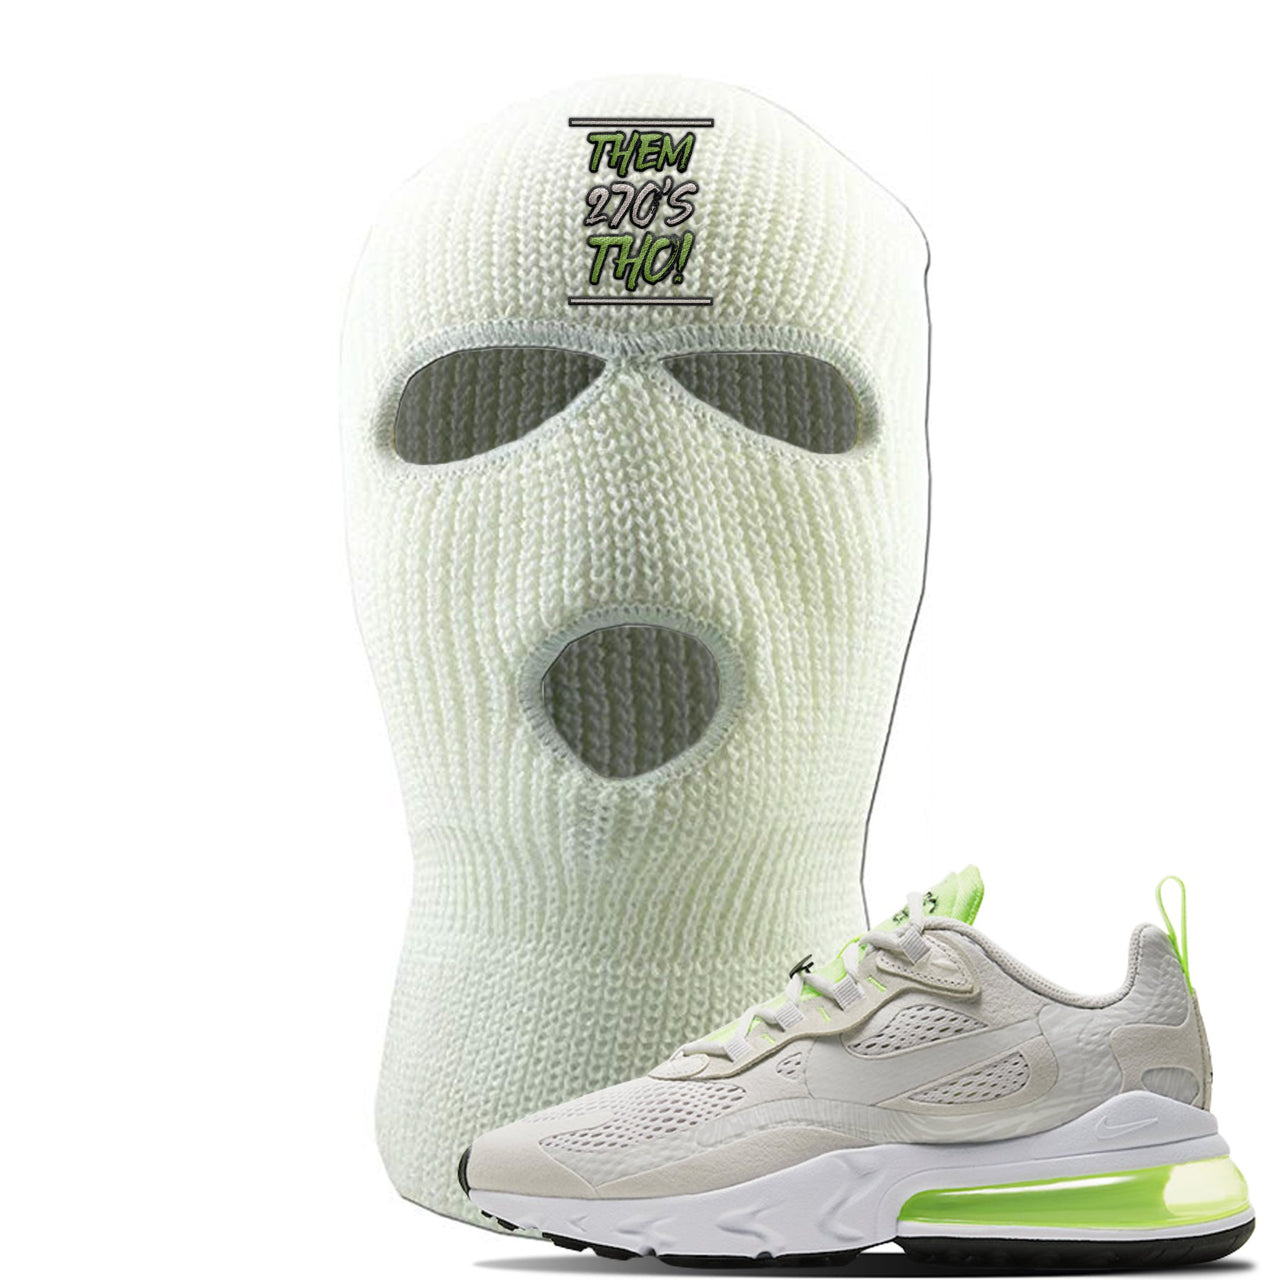 Ghost Green React 270s Ski Mask | Them 270's Tho, White